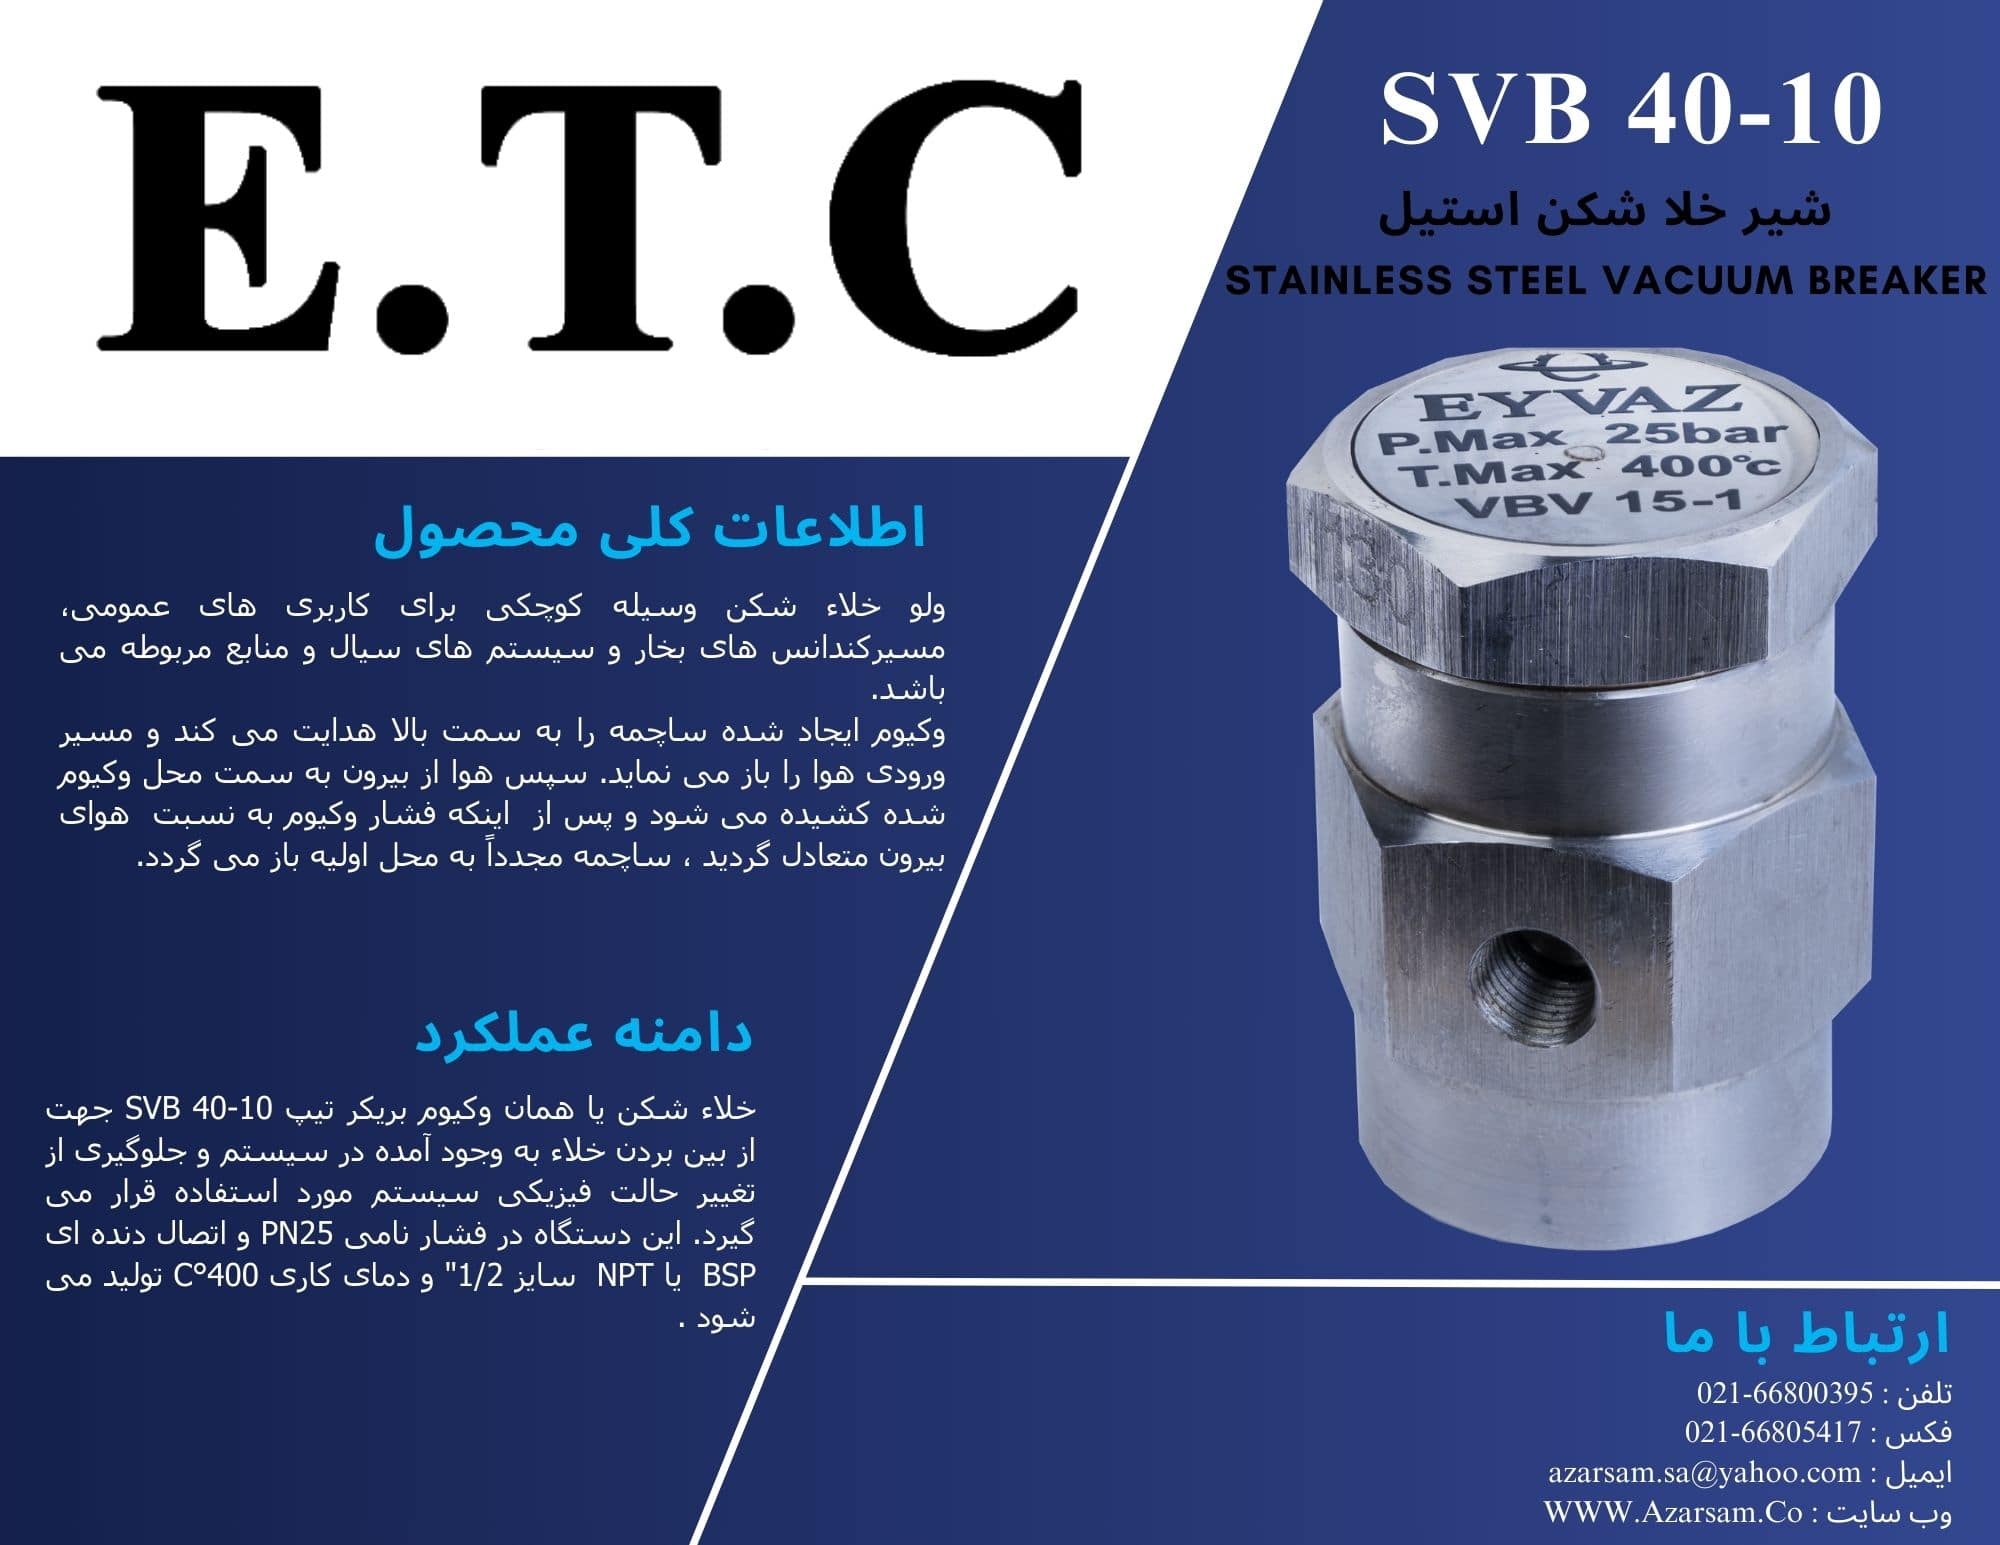 شیر خلا شکن استیل عیوض Stainless Steel Vacuum Breaker SVB 40-10